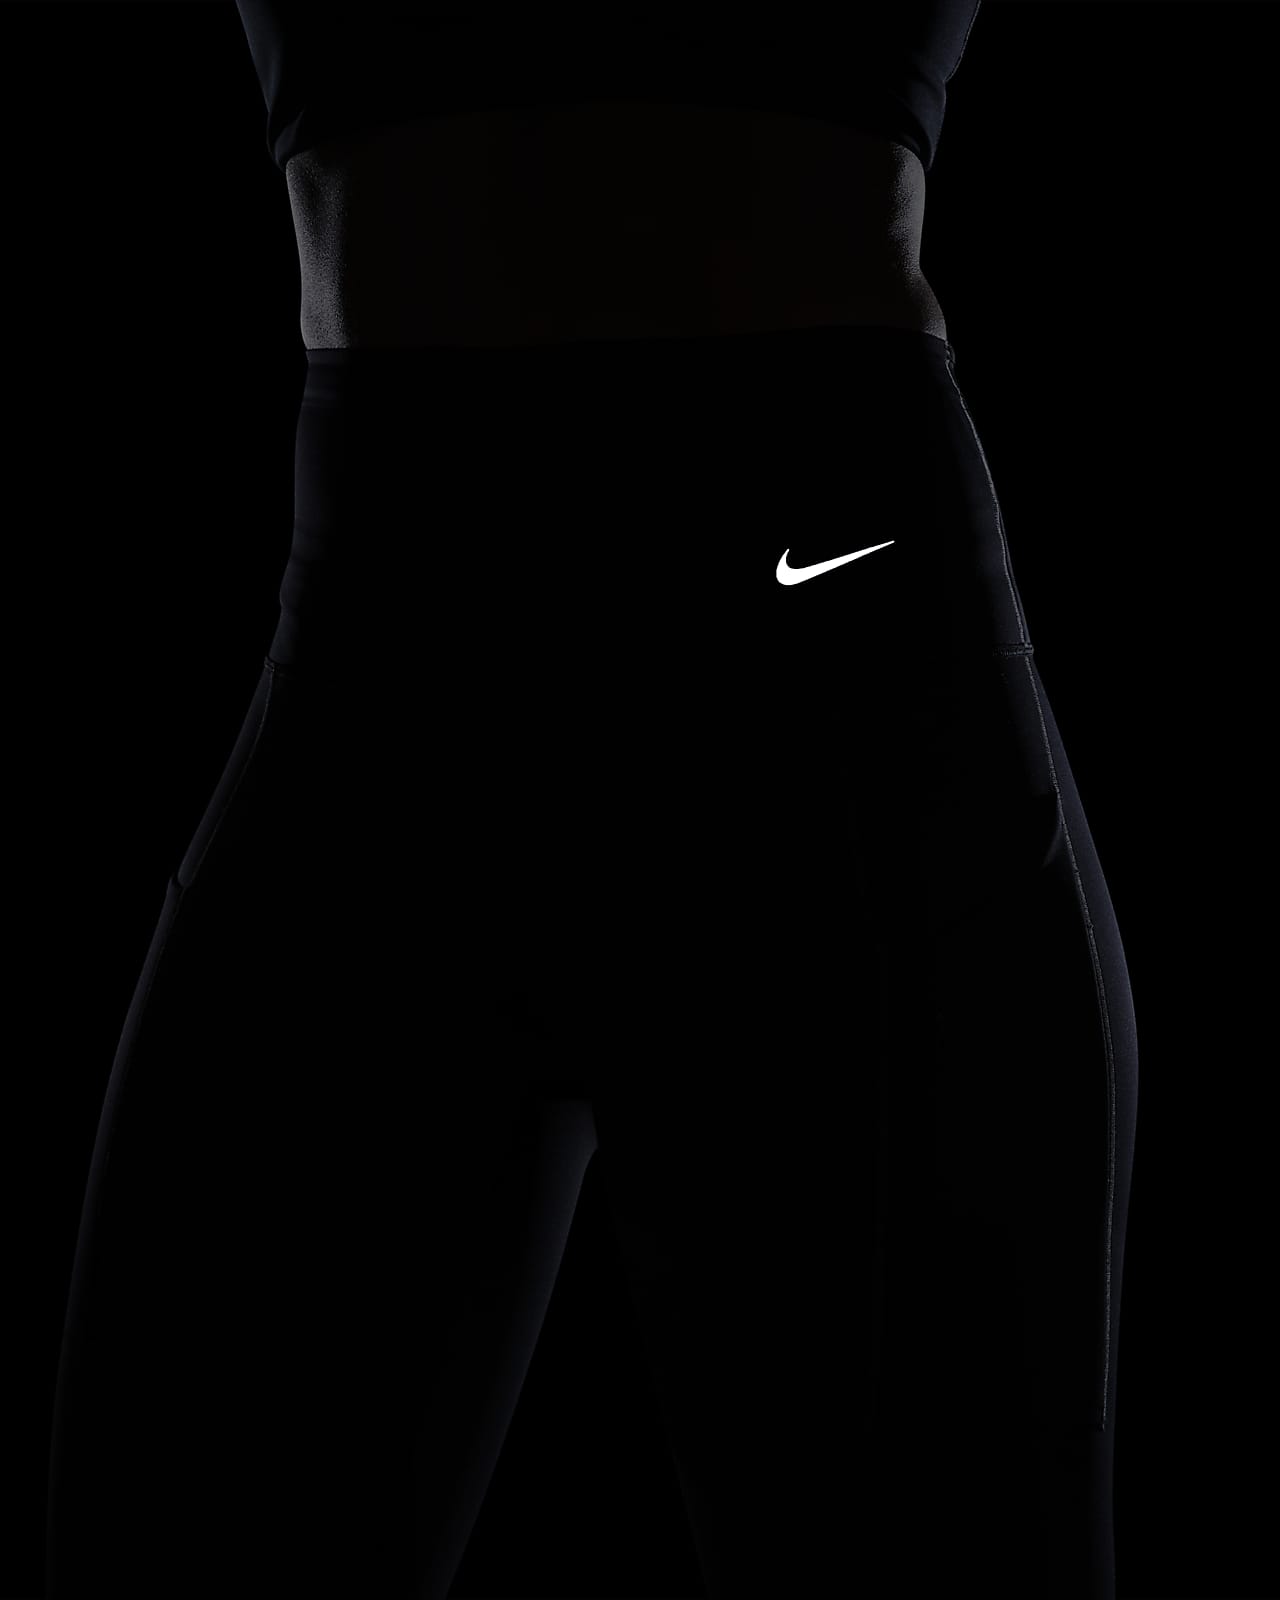 Nike Dri Fit Just Do It Black Cropped Running Leggings Woman's